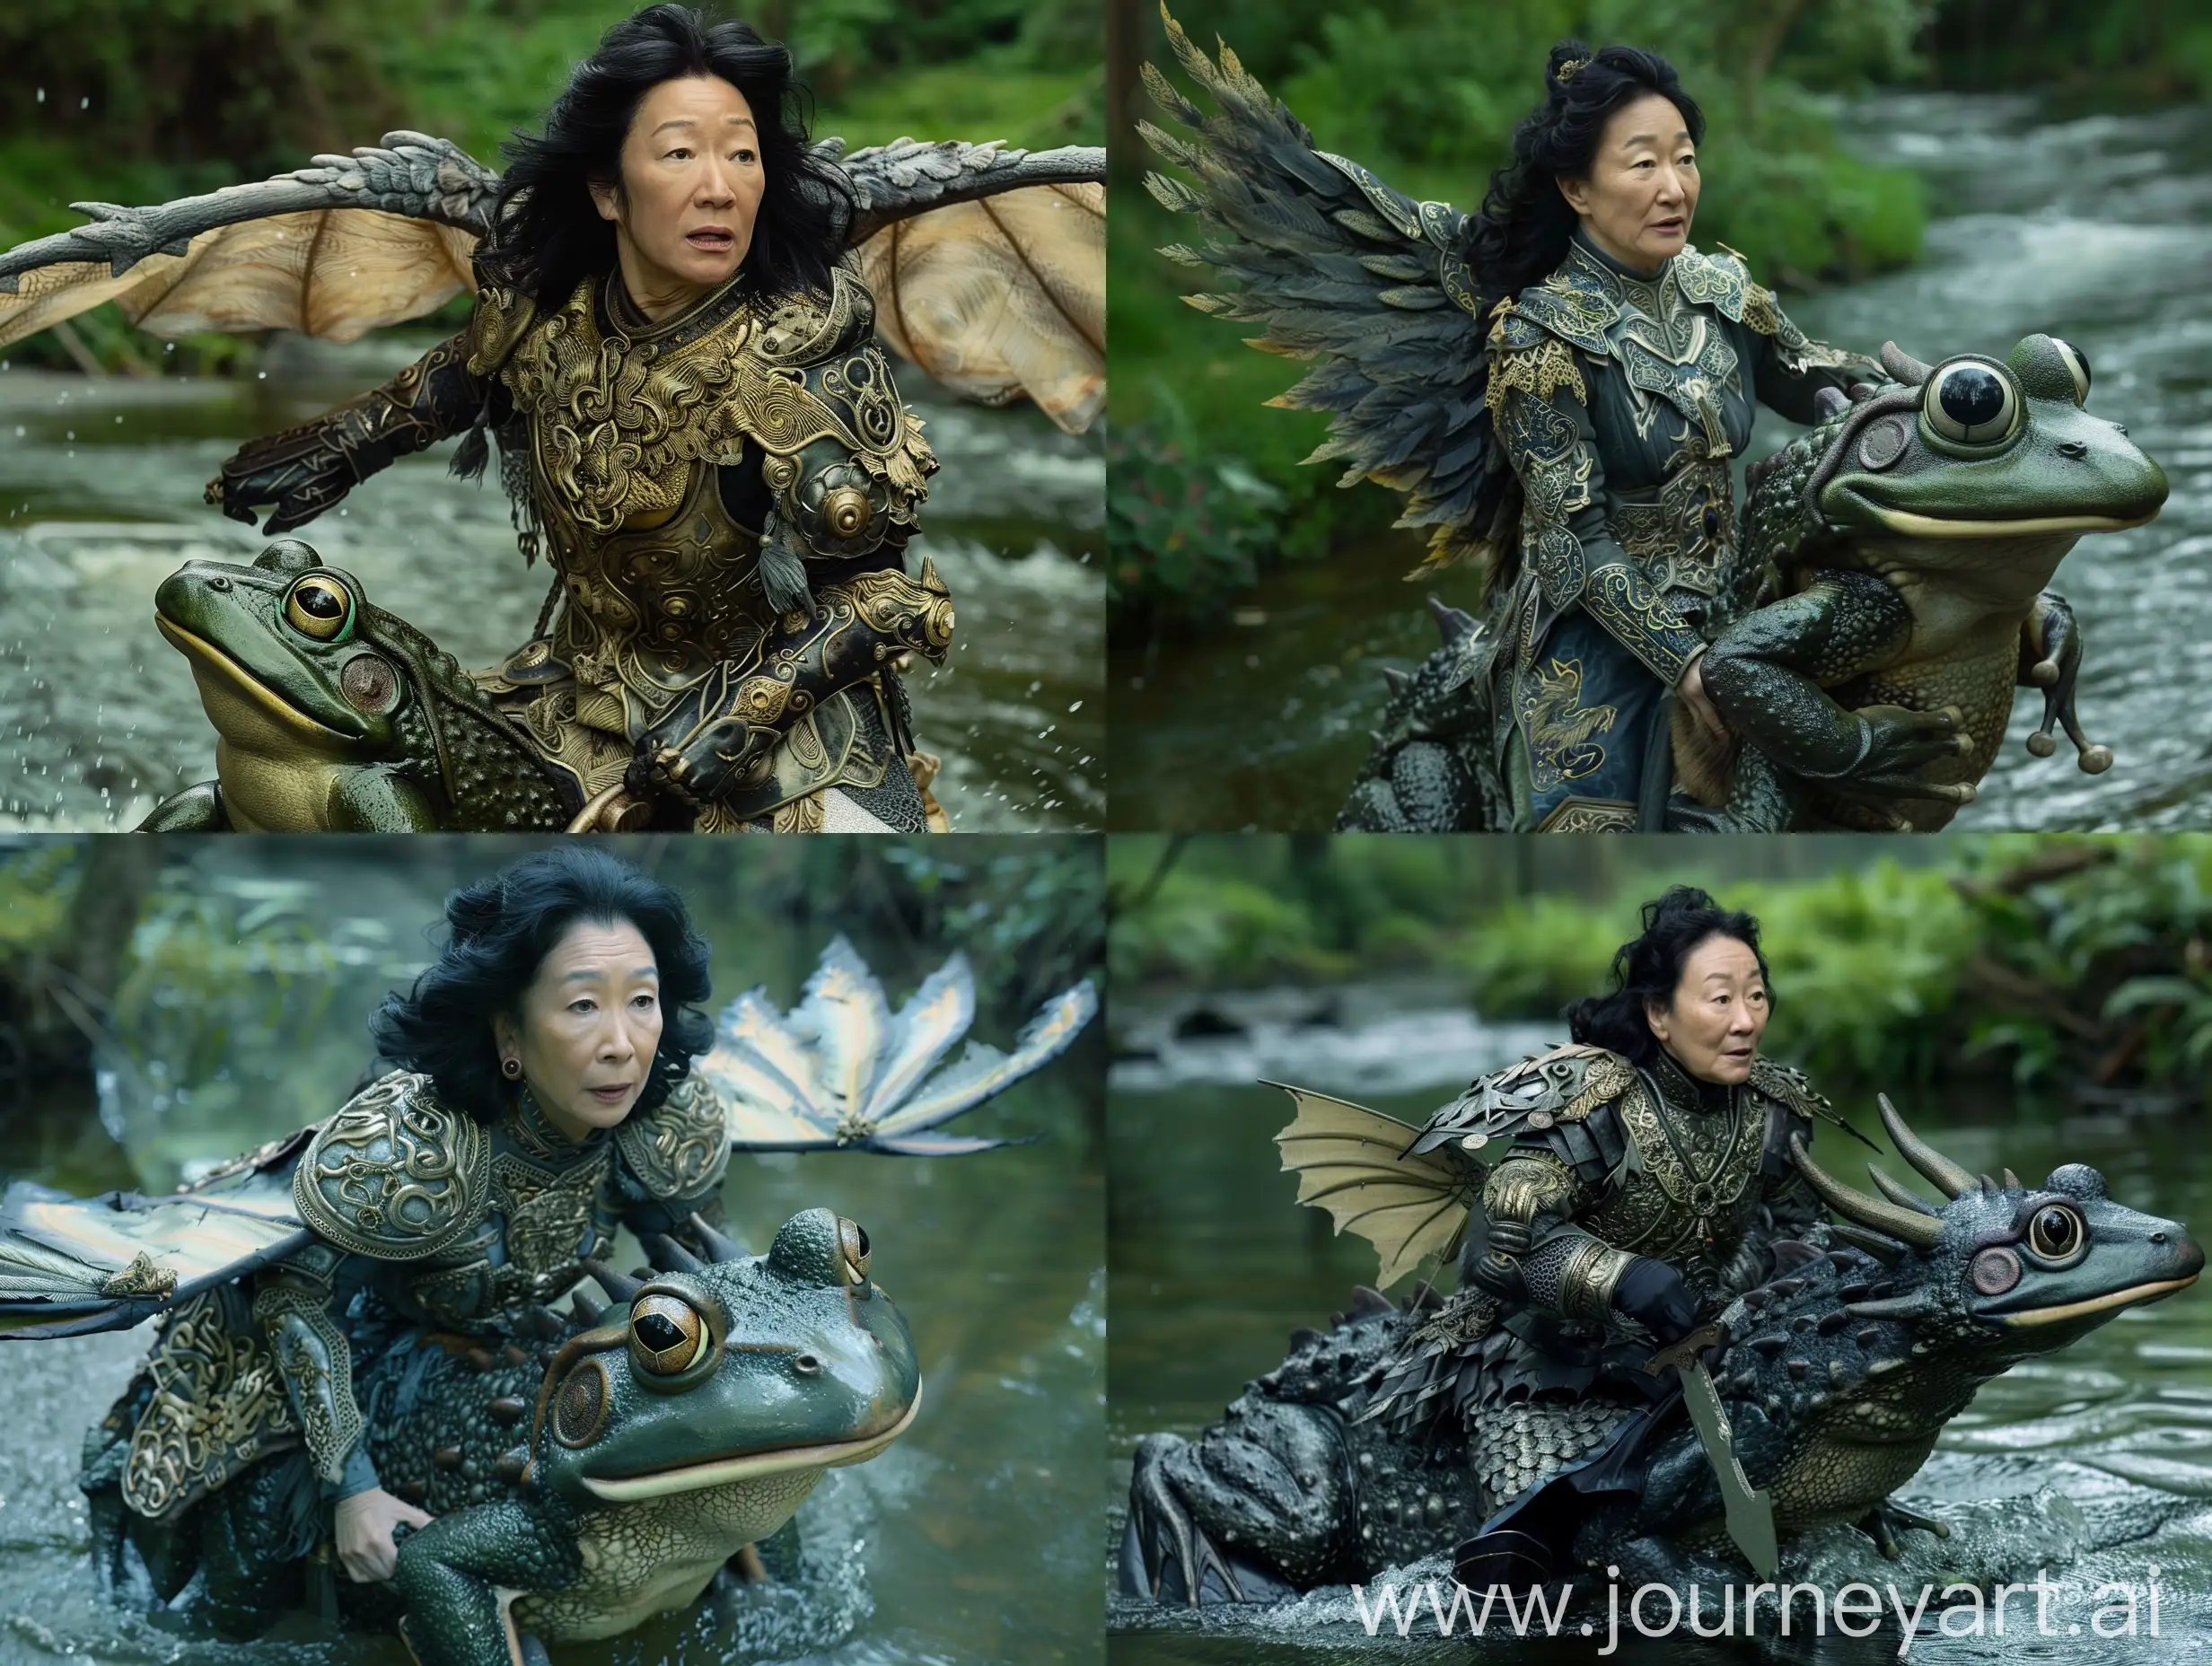 Sandra-Oh-Riding-Winged-Dragonlike-Frog-Knight-in-Forest-River-Kids-Fantasy-Movie-Still